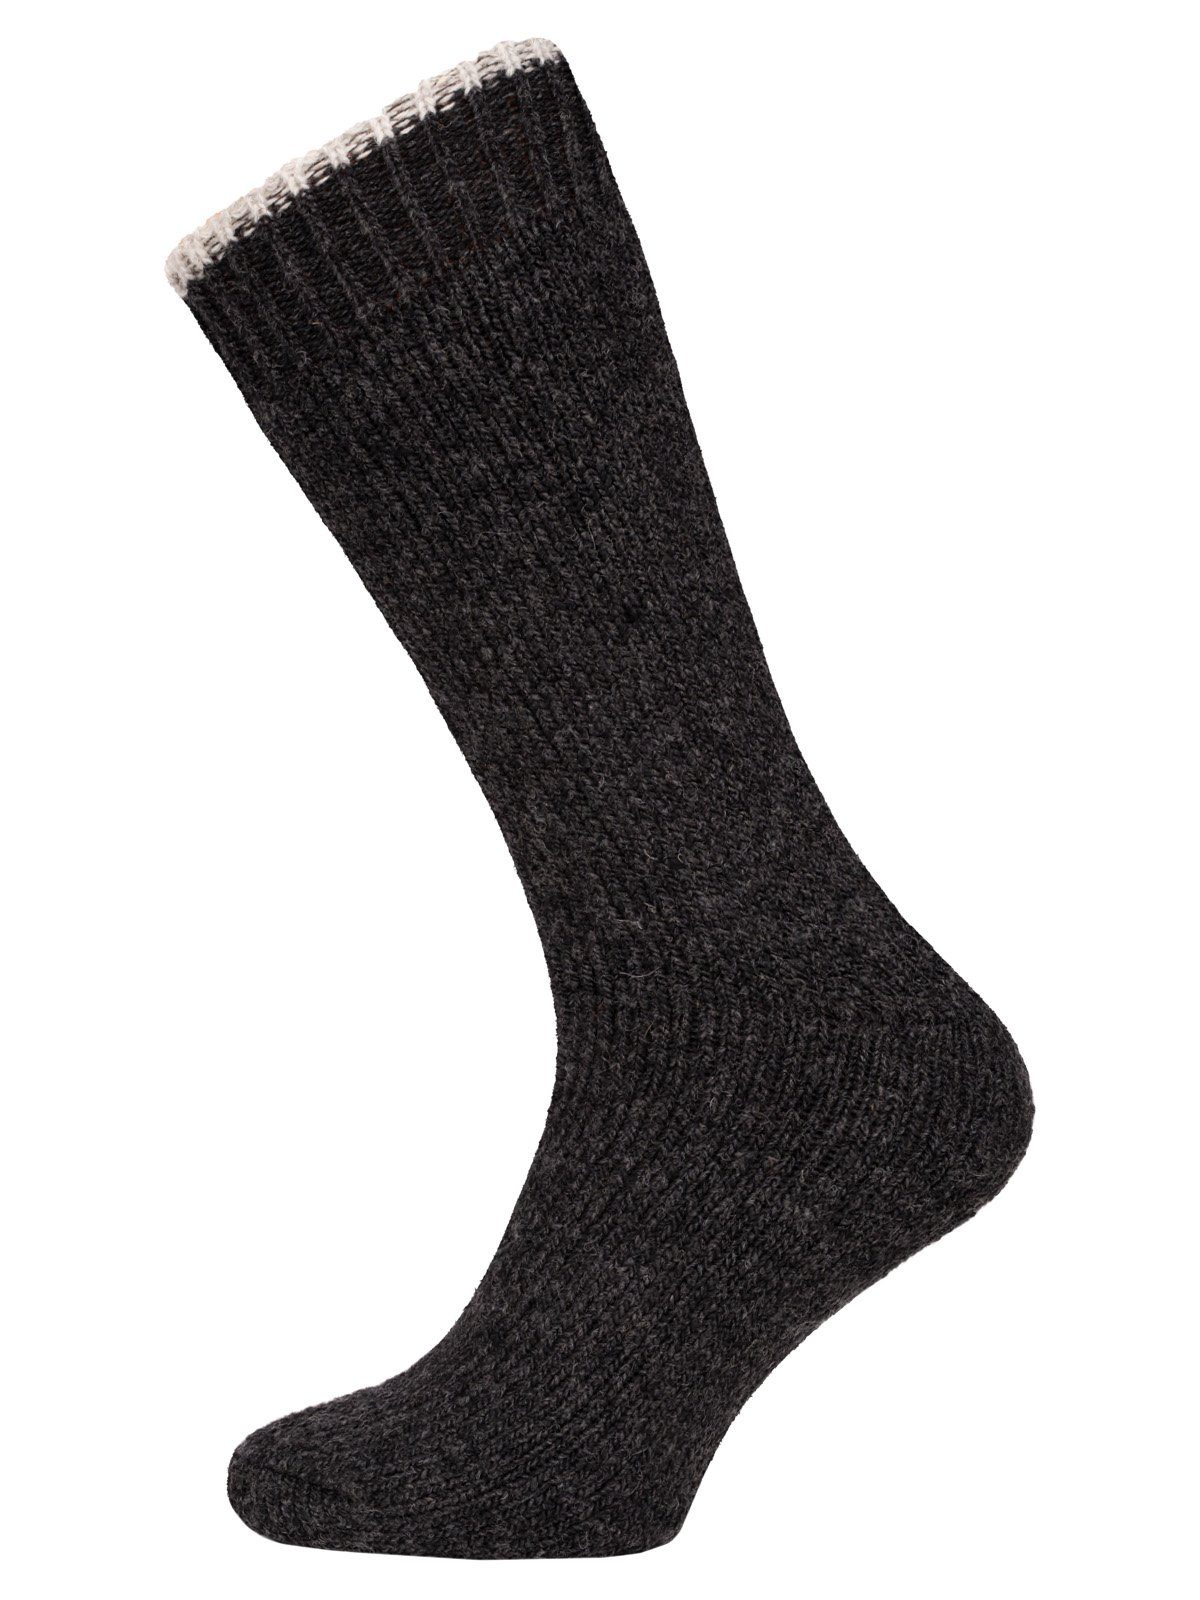 HomeOfSocks Norwegersocken Skandinavische Wollsocke "Inuit" Nordic Frottee Extra Dicke Socken Warm Hoher 80% Wollanteil Einfarbig Anthrazit